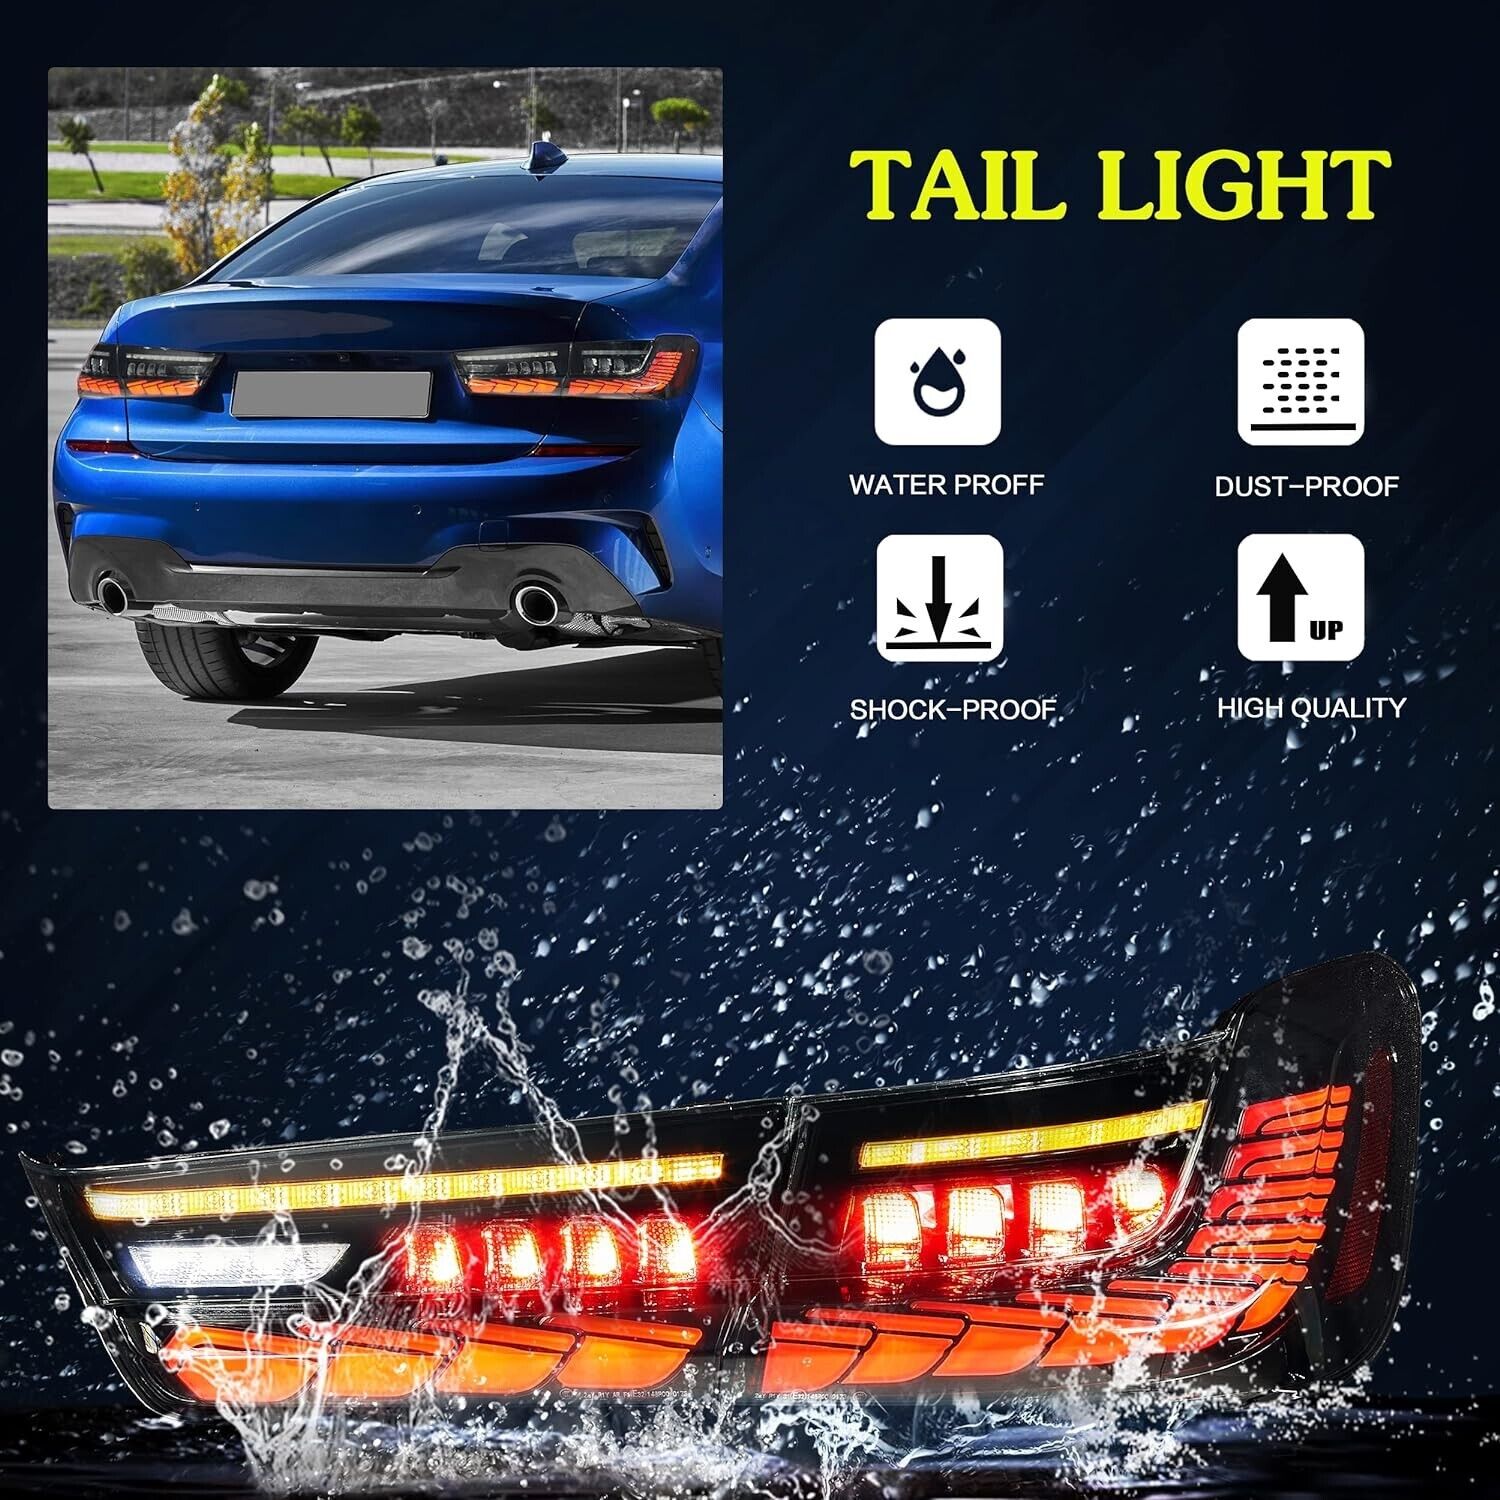 VLAND OLED Rear LED LIGHTBAR Tail Lights 19-22 BMW 3 Series G20 M3 G28 GTS 330i M340i SEQENTIAL ANIMATED